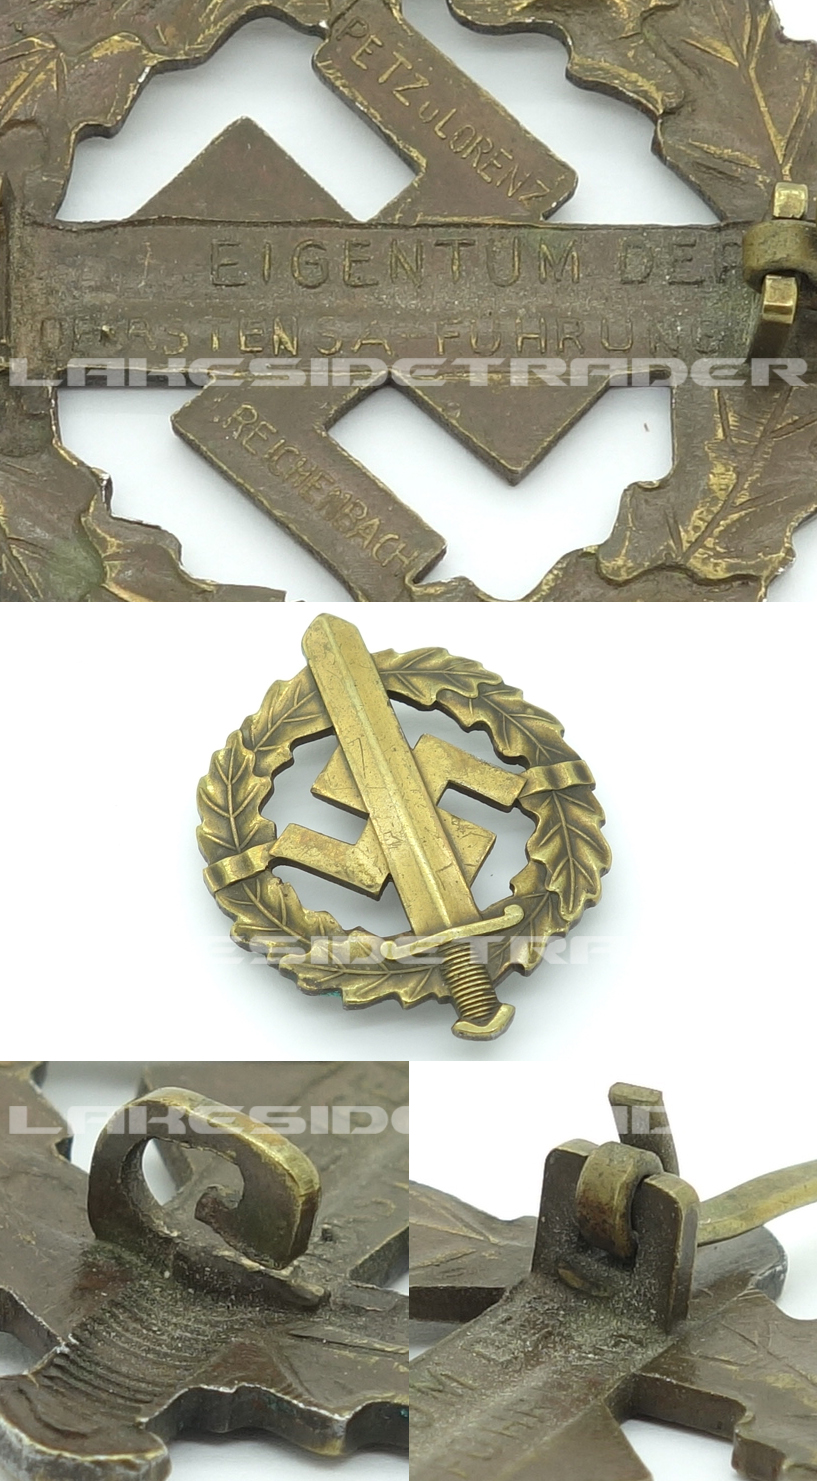 SA Sports Badge in Bronze by Petz & Lorenz 